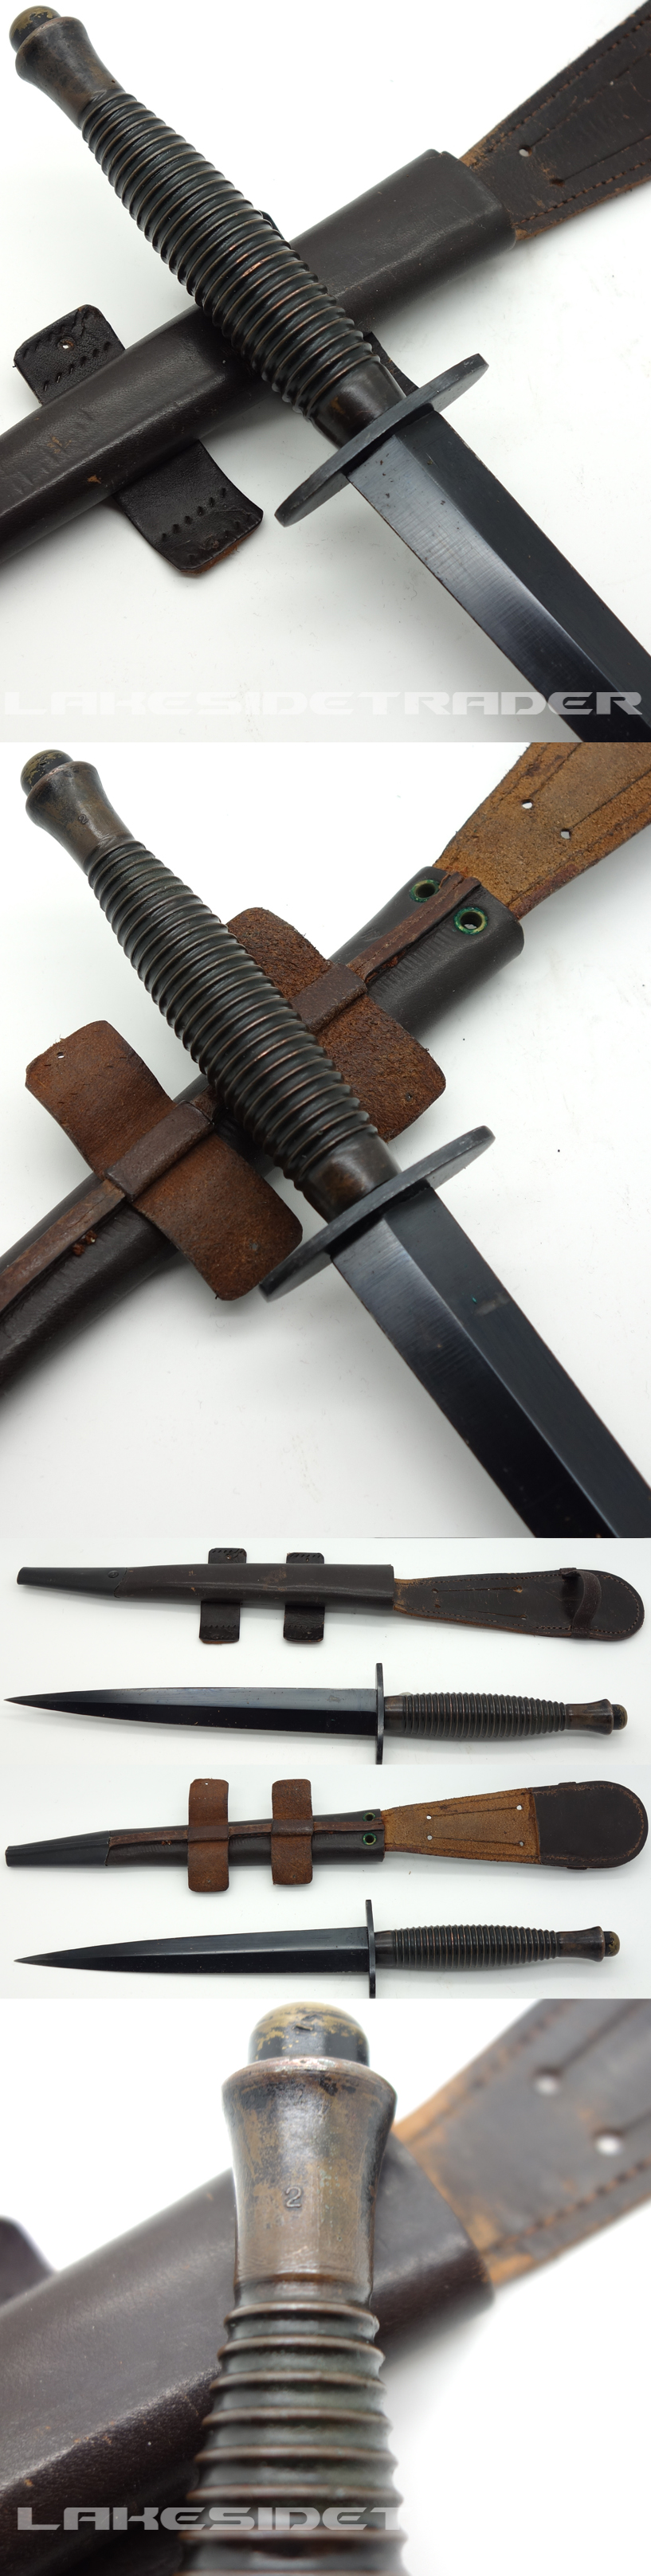 British Fairburn/Sykes Fighting Knife